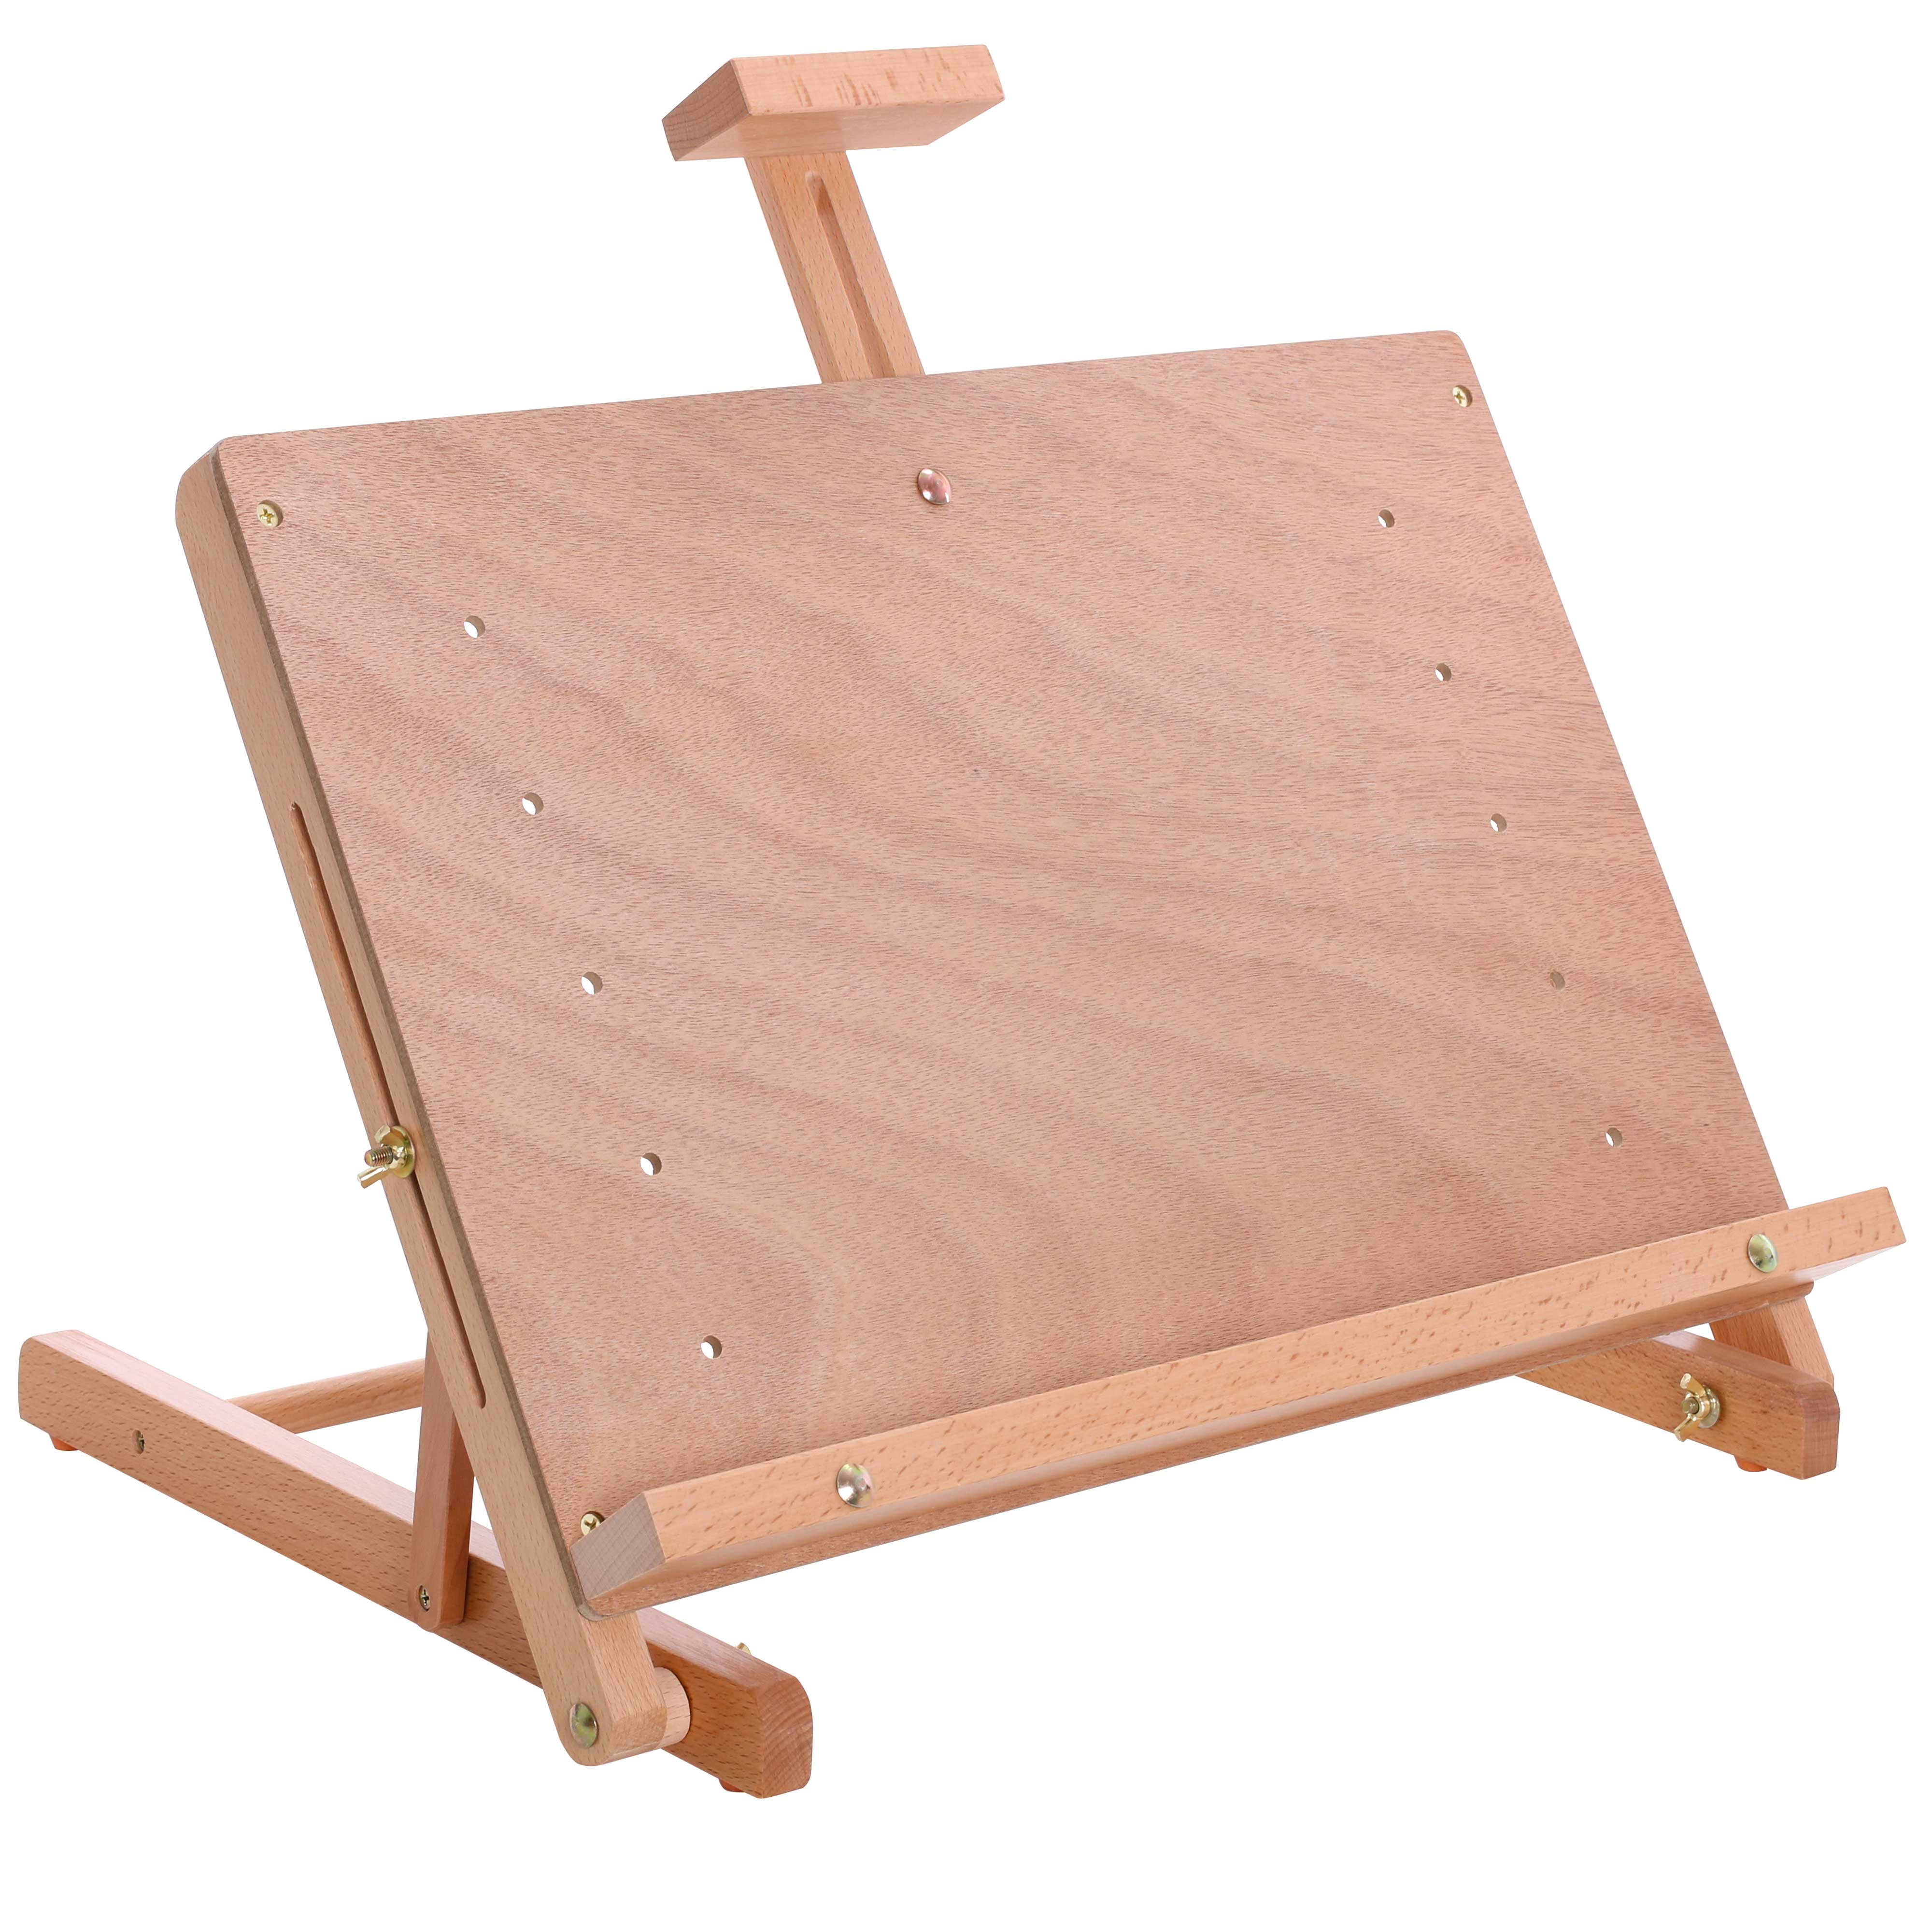 U.S. Art Supply Cancun Solid Wooden Adjustable Tabletop Artist Studio